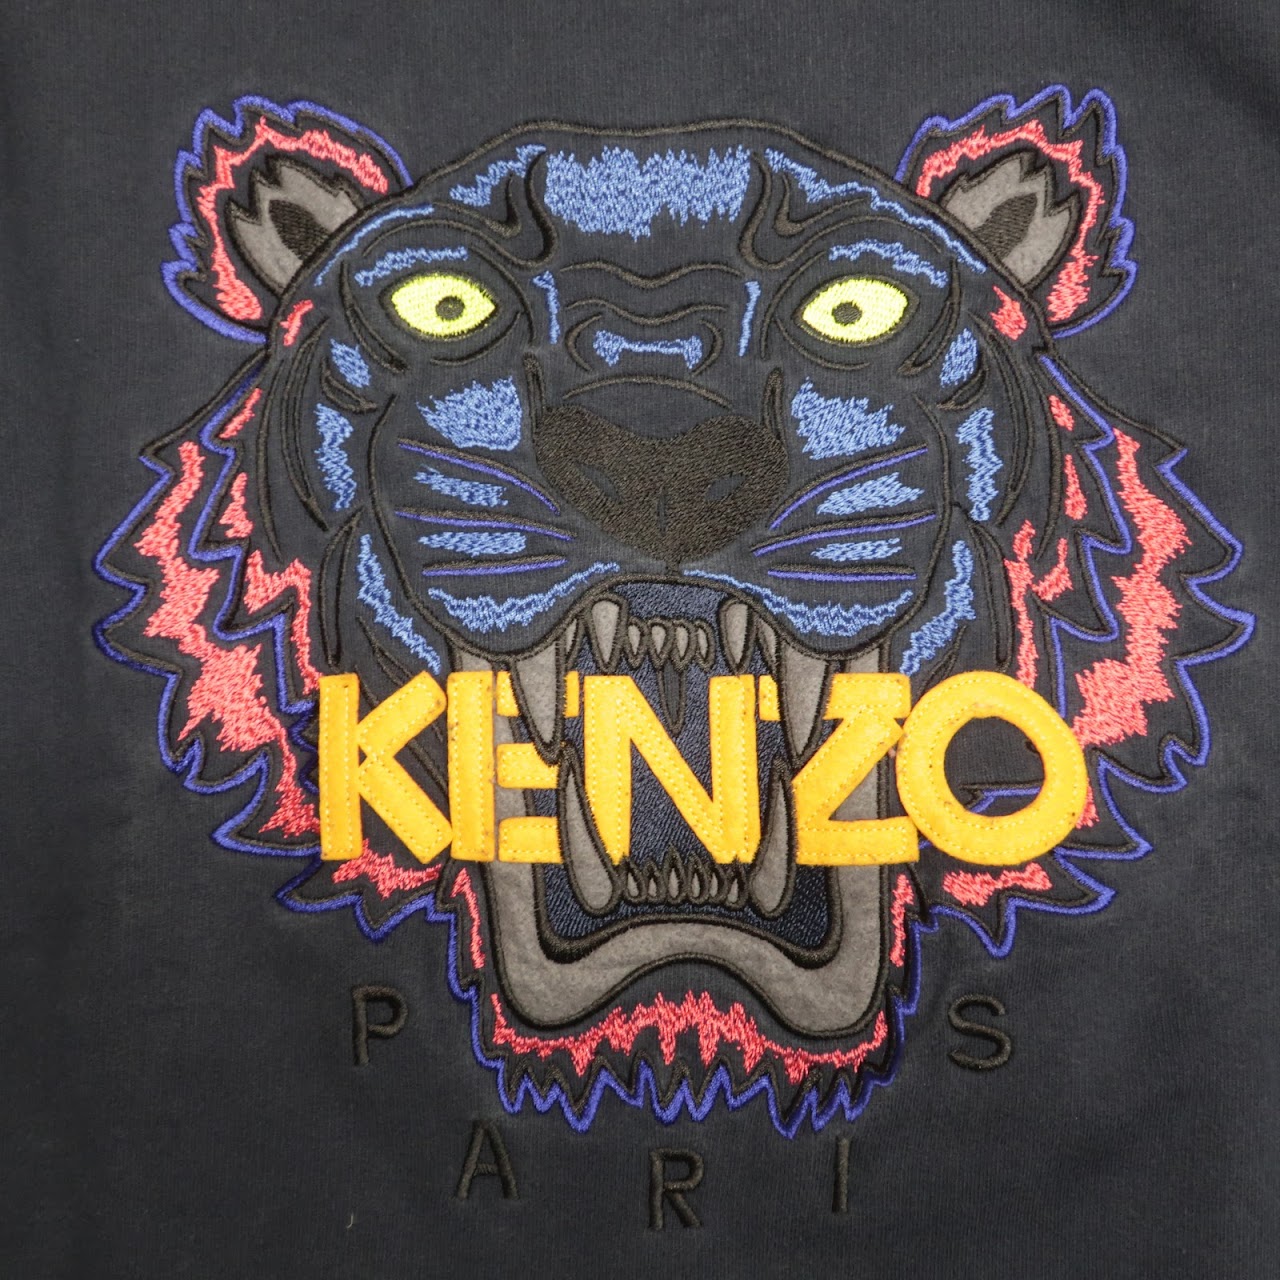 Kenzo Paris Embroidered Sweatshirt